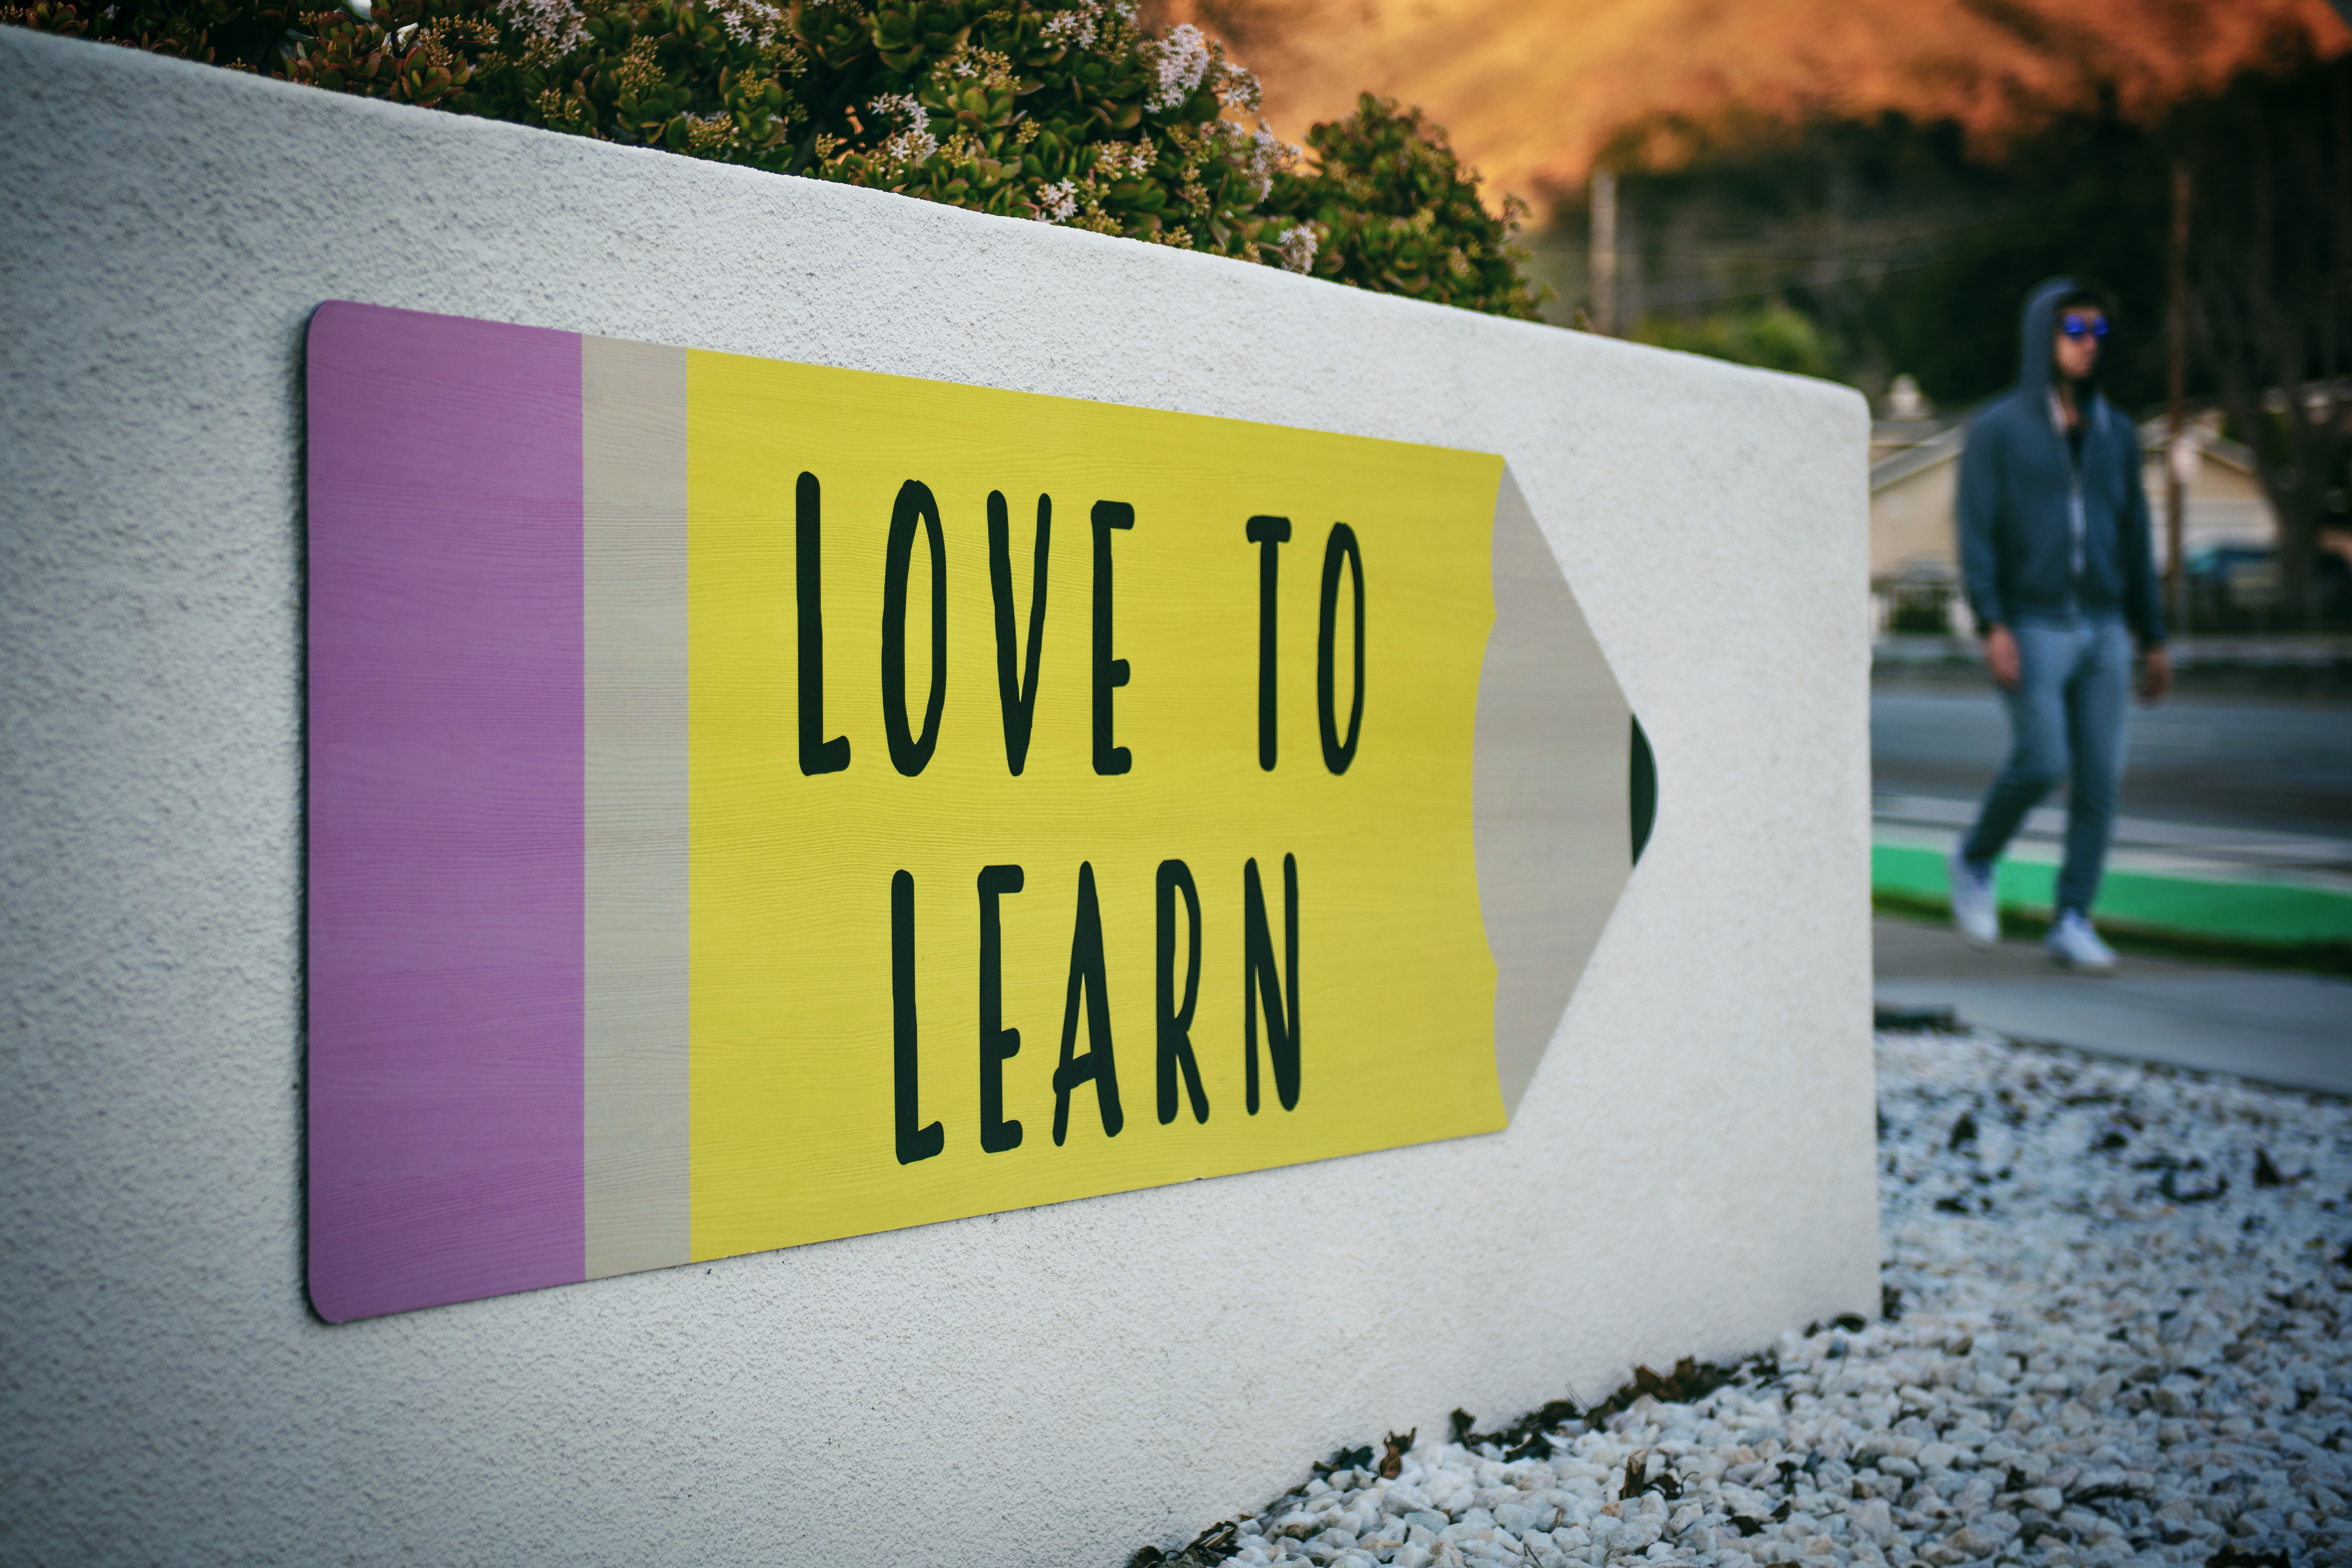 panneau indicateur "love to learn"